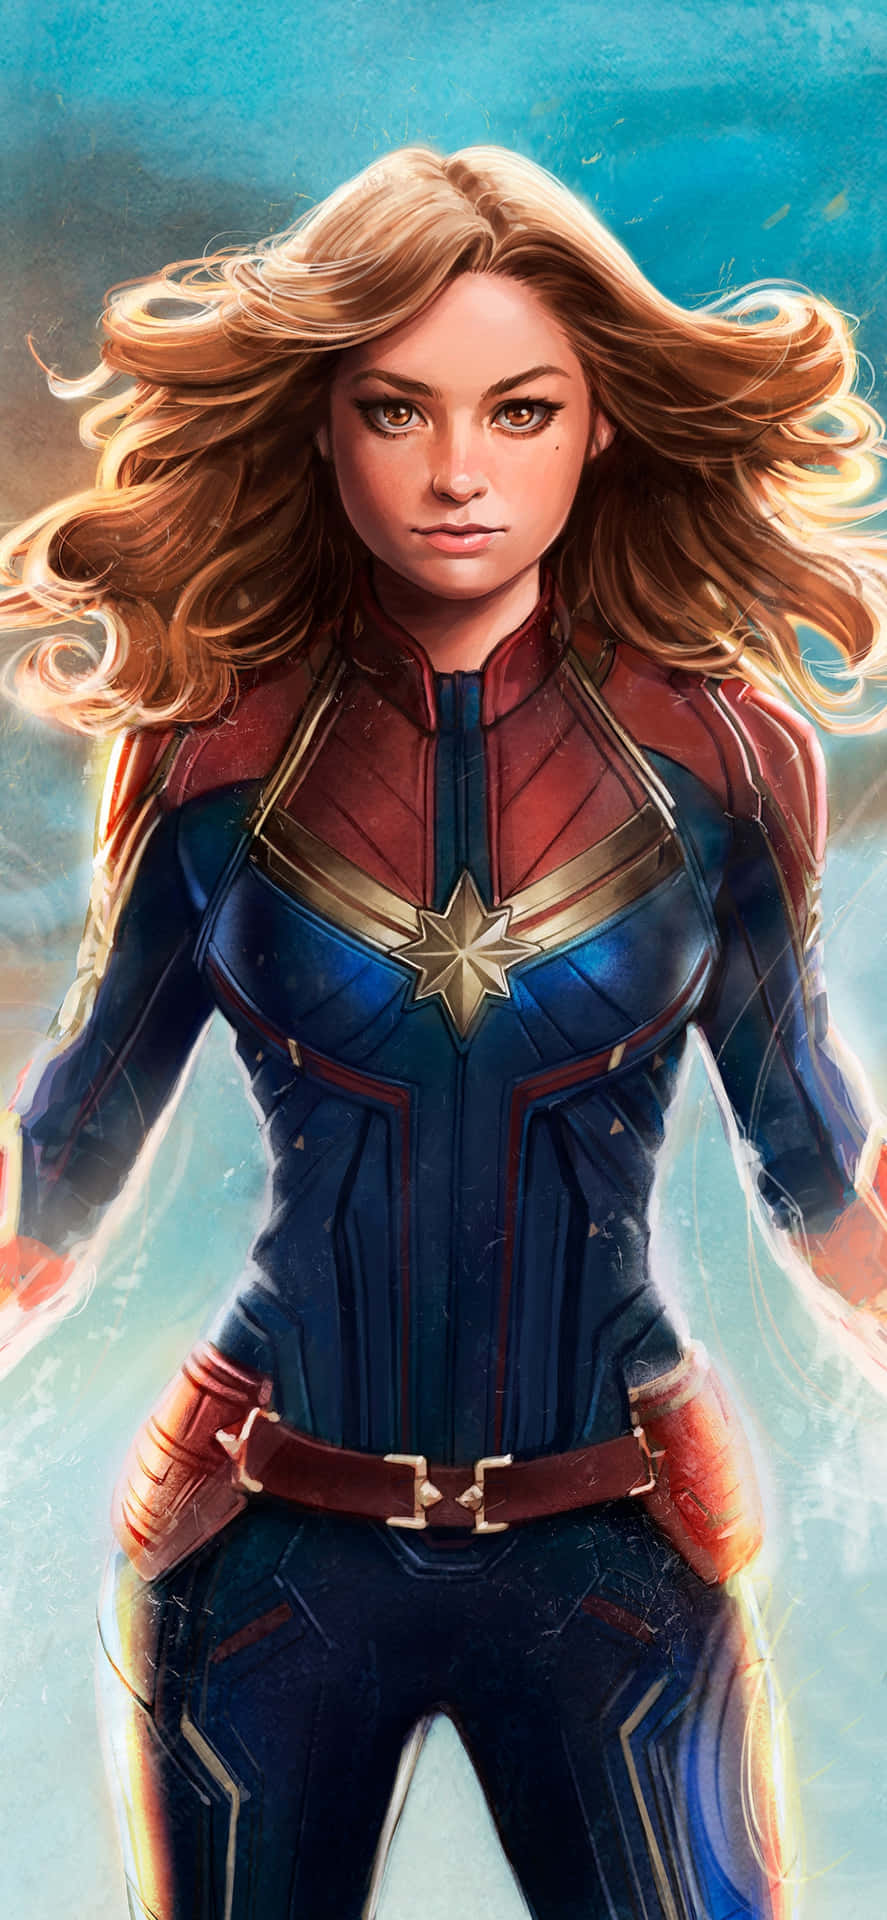 Digital Captain Marvel Art Iphone Wallpaper